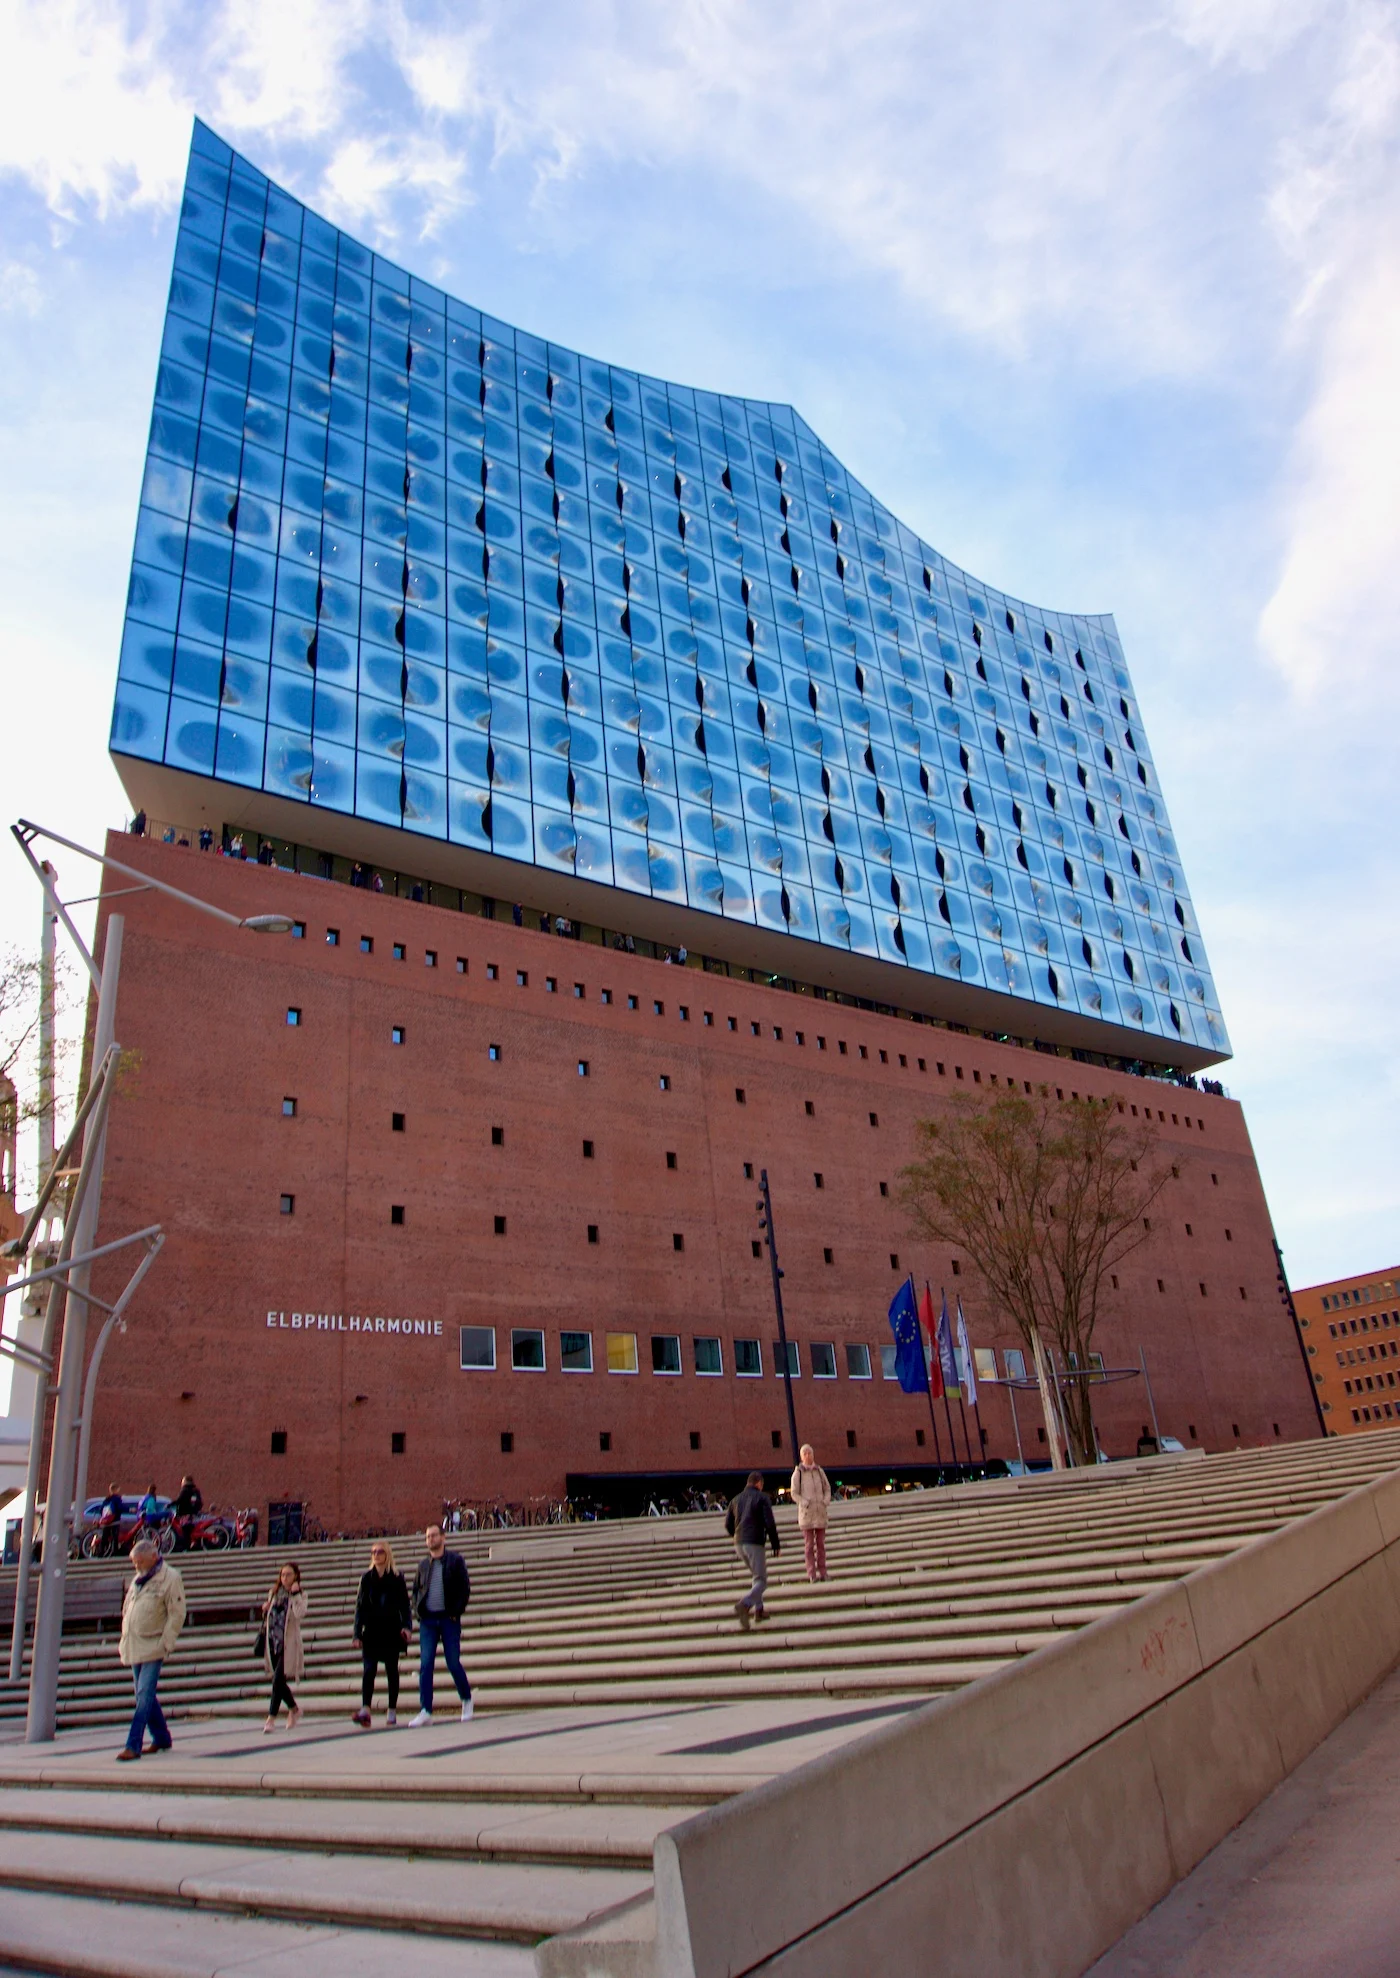 Elbphilharmonie concert hall in Hamburg, Germany seen in teacher fellowships for social studies travel